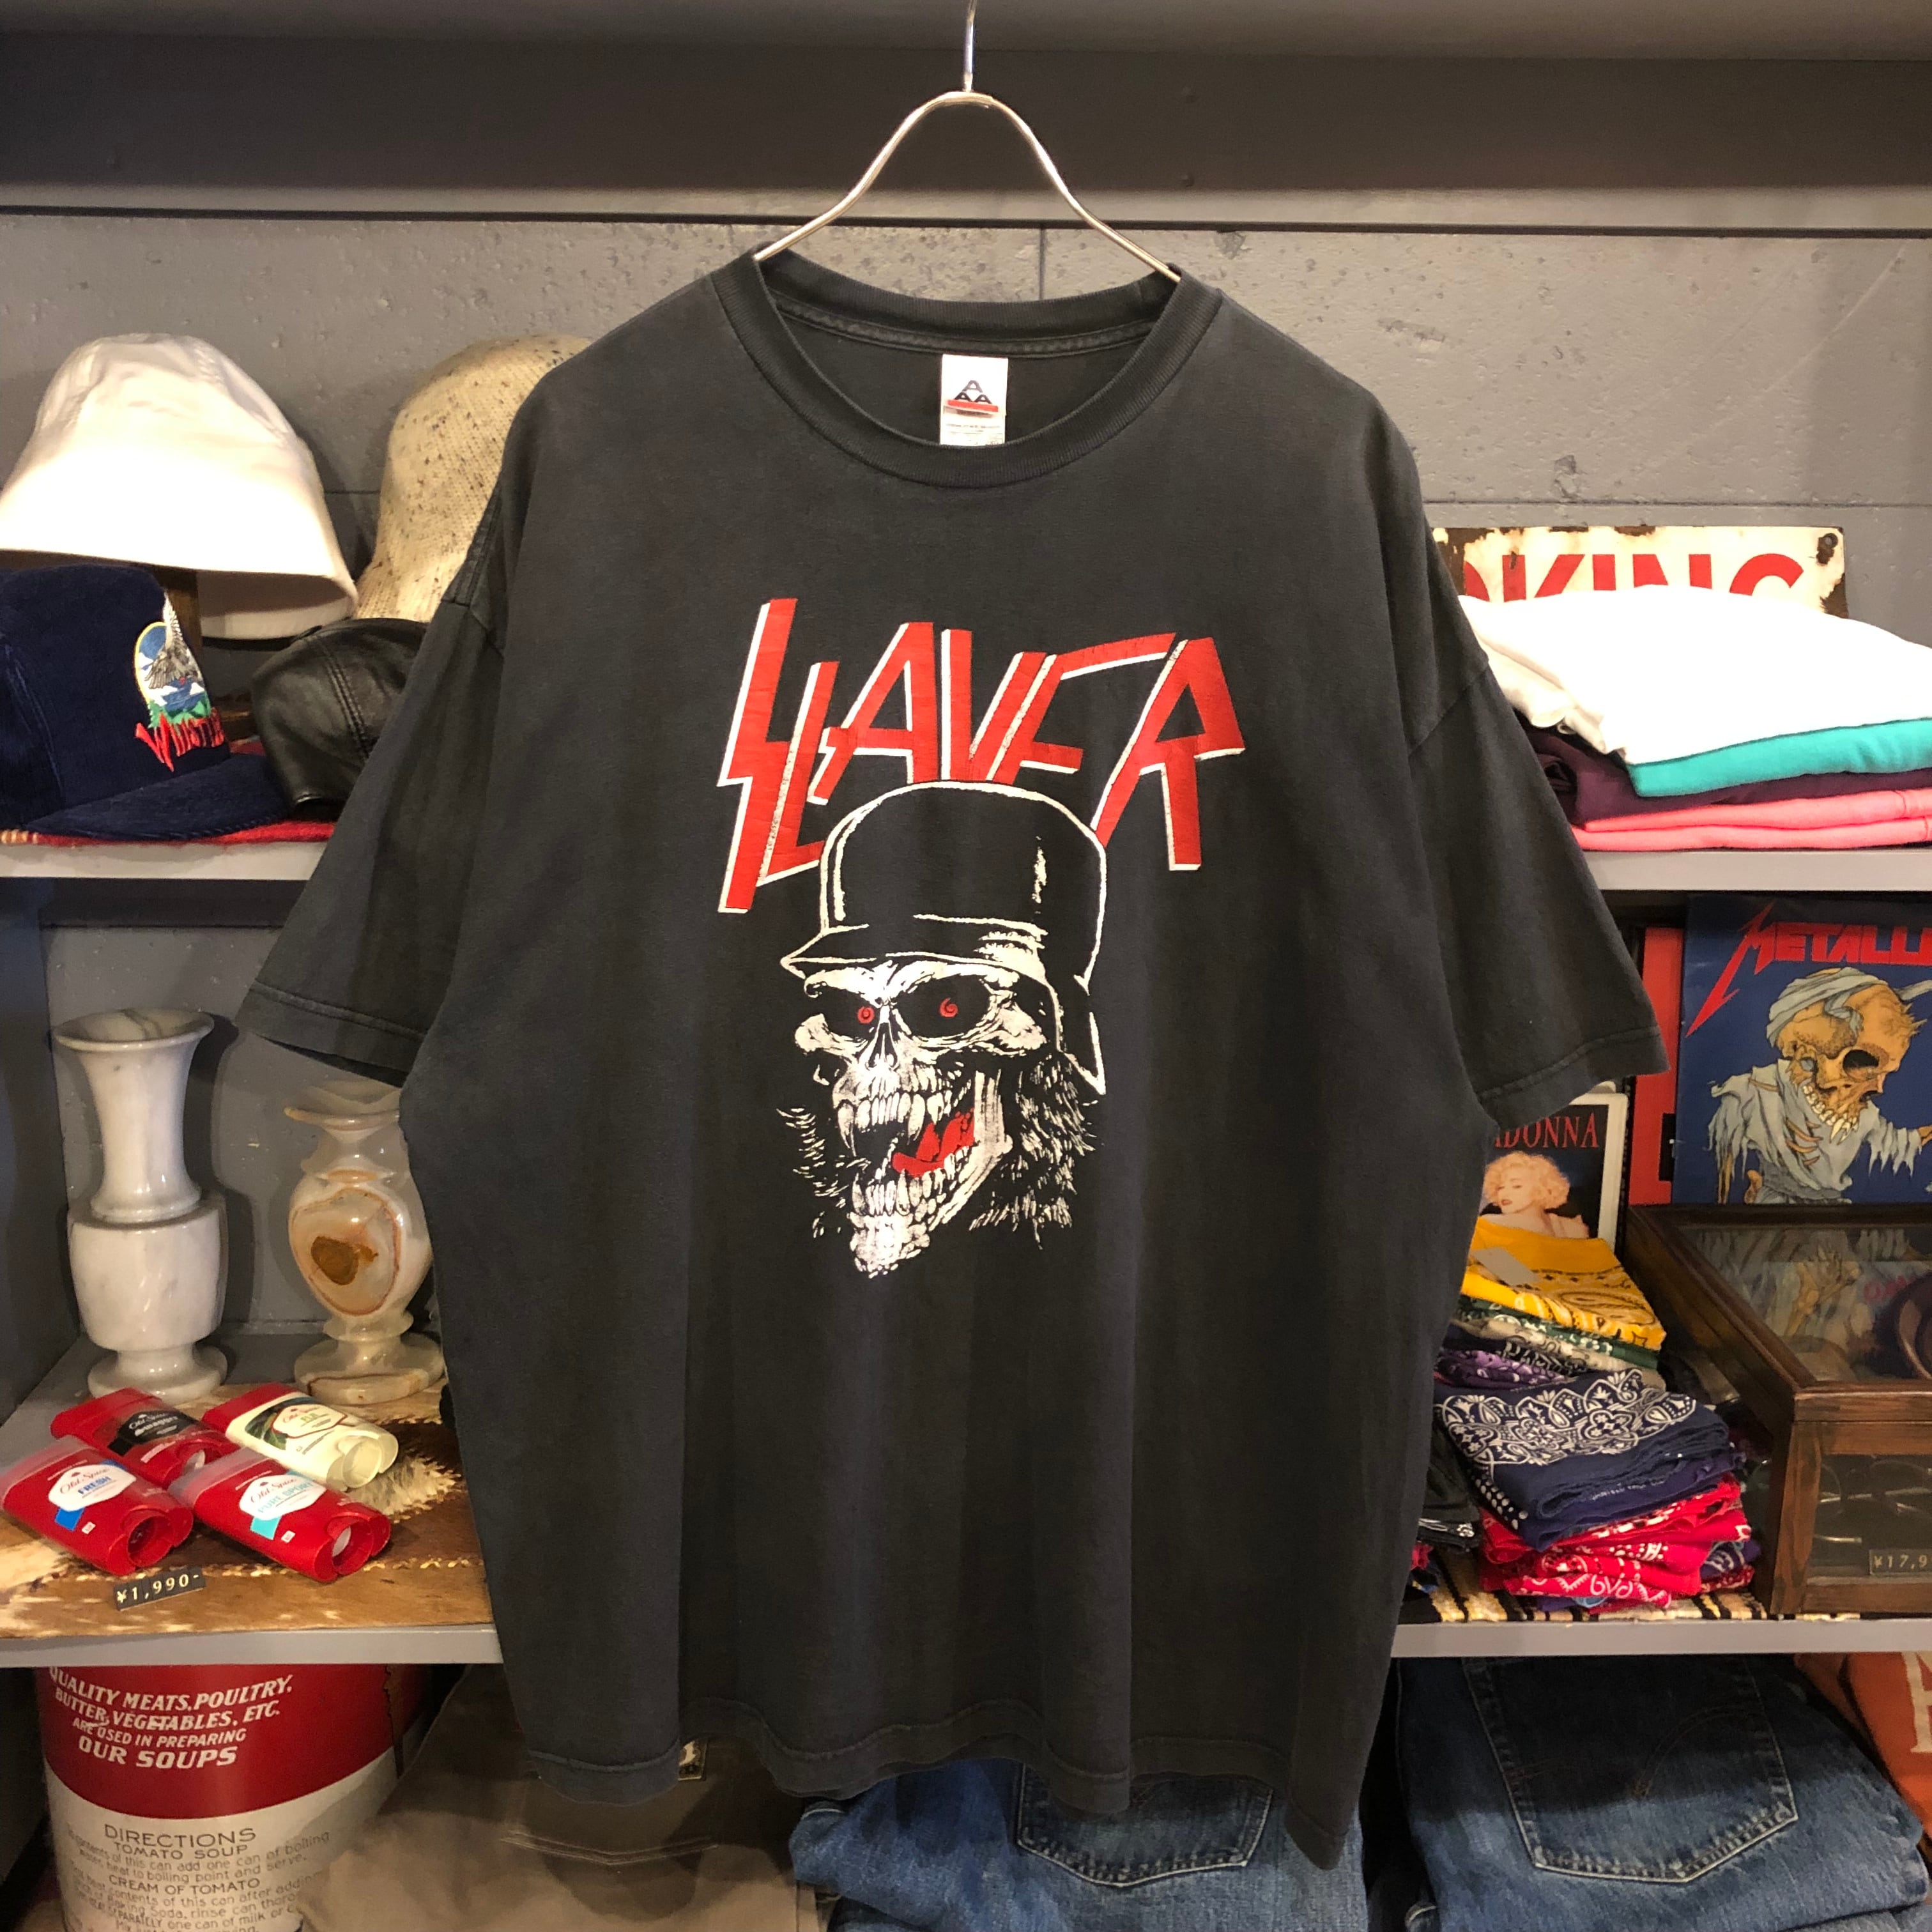 00s Slayer T-Shirt